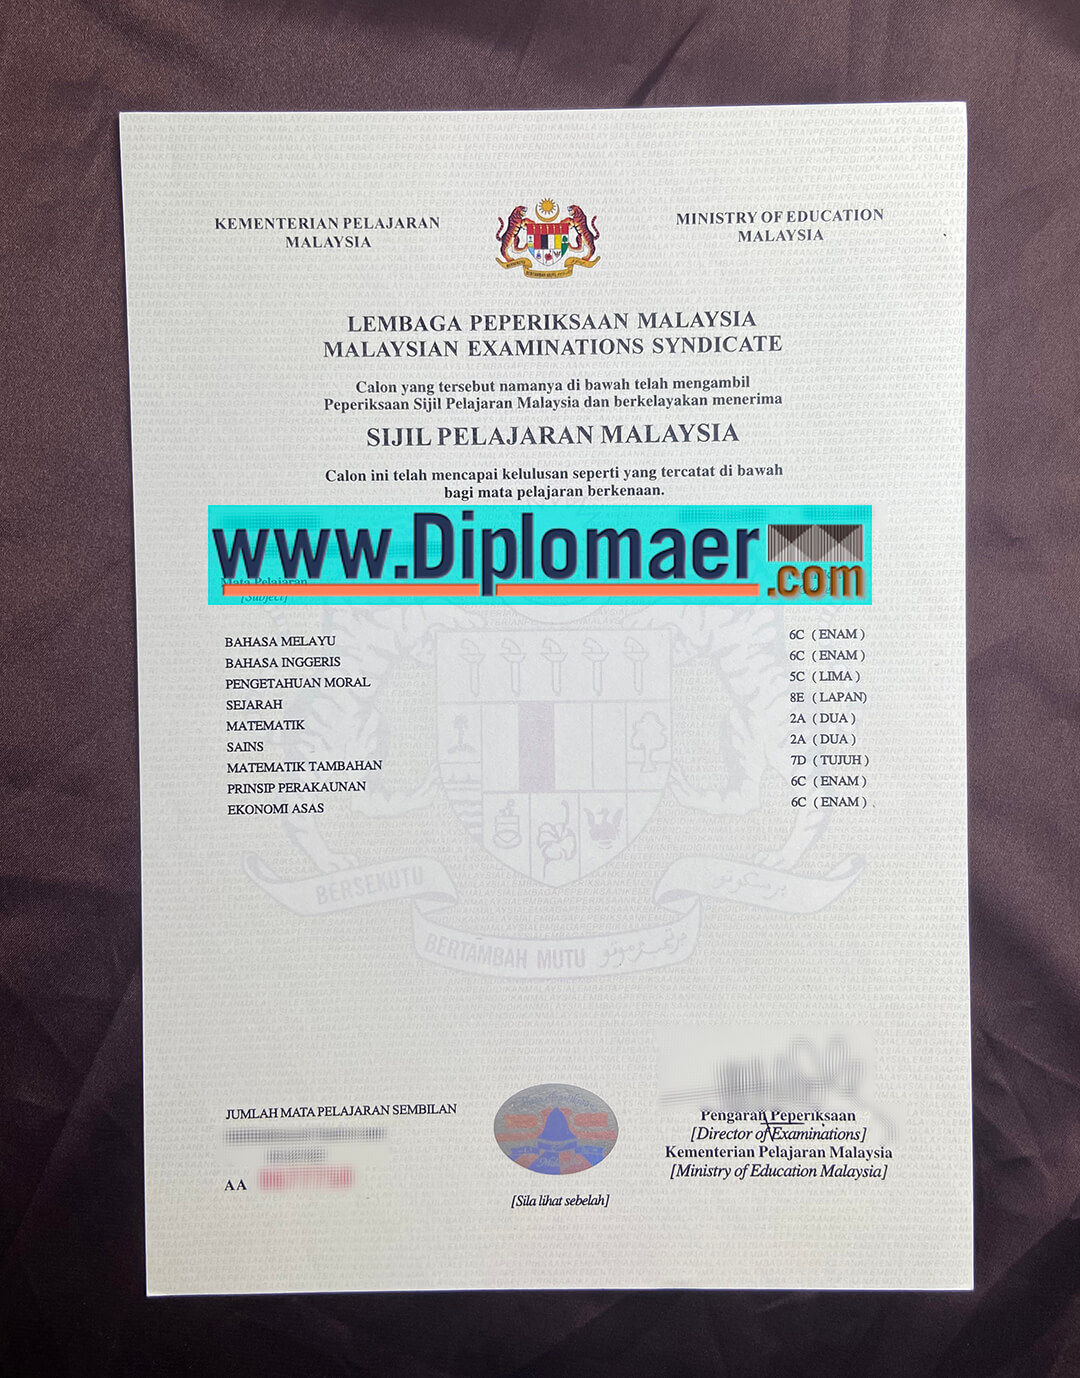 SPM Fake Diploma - How to obtain Malaysian SPM diploma quickly?